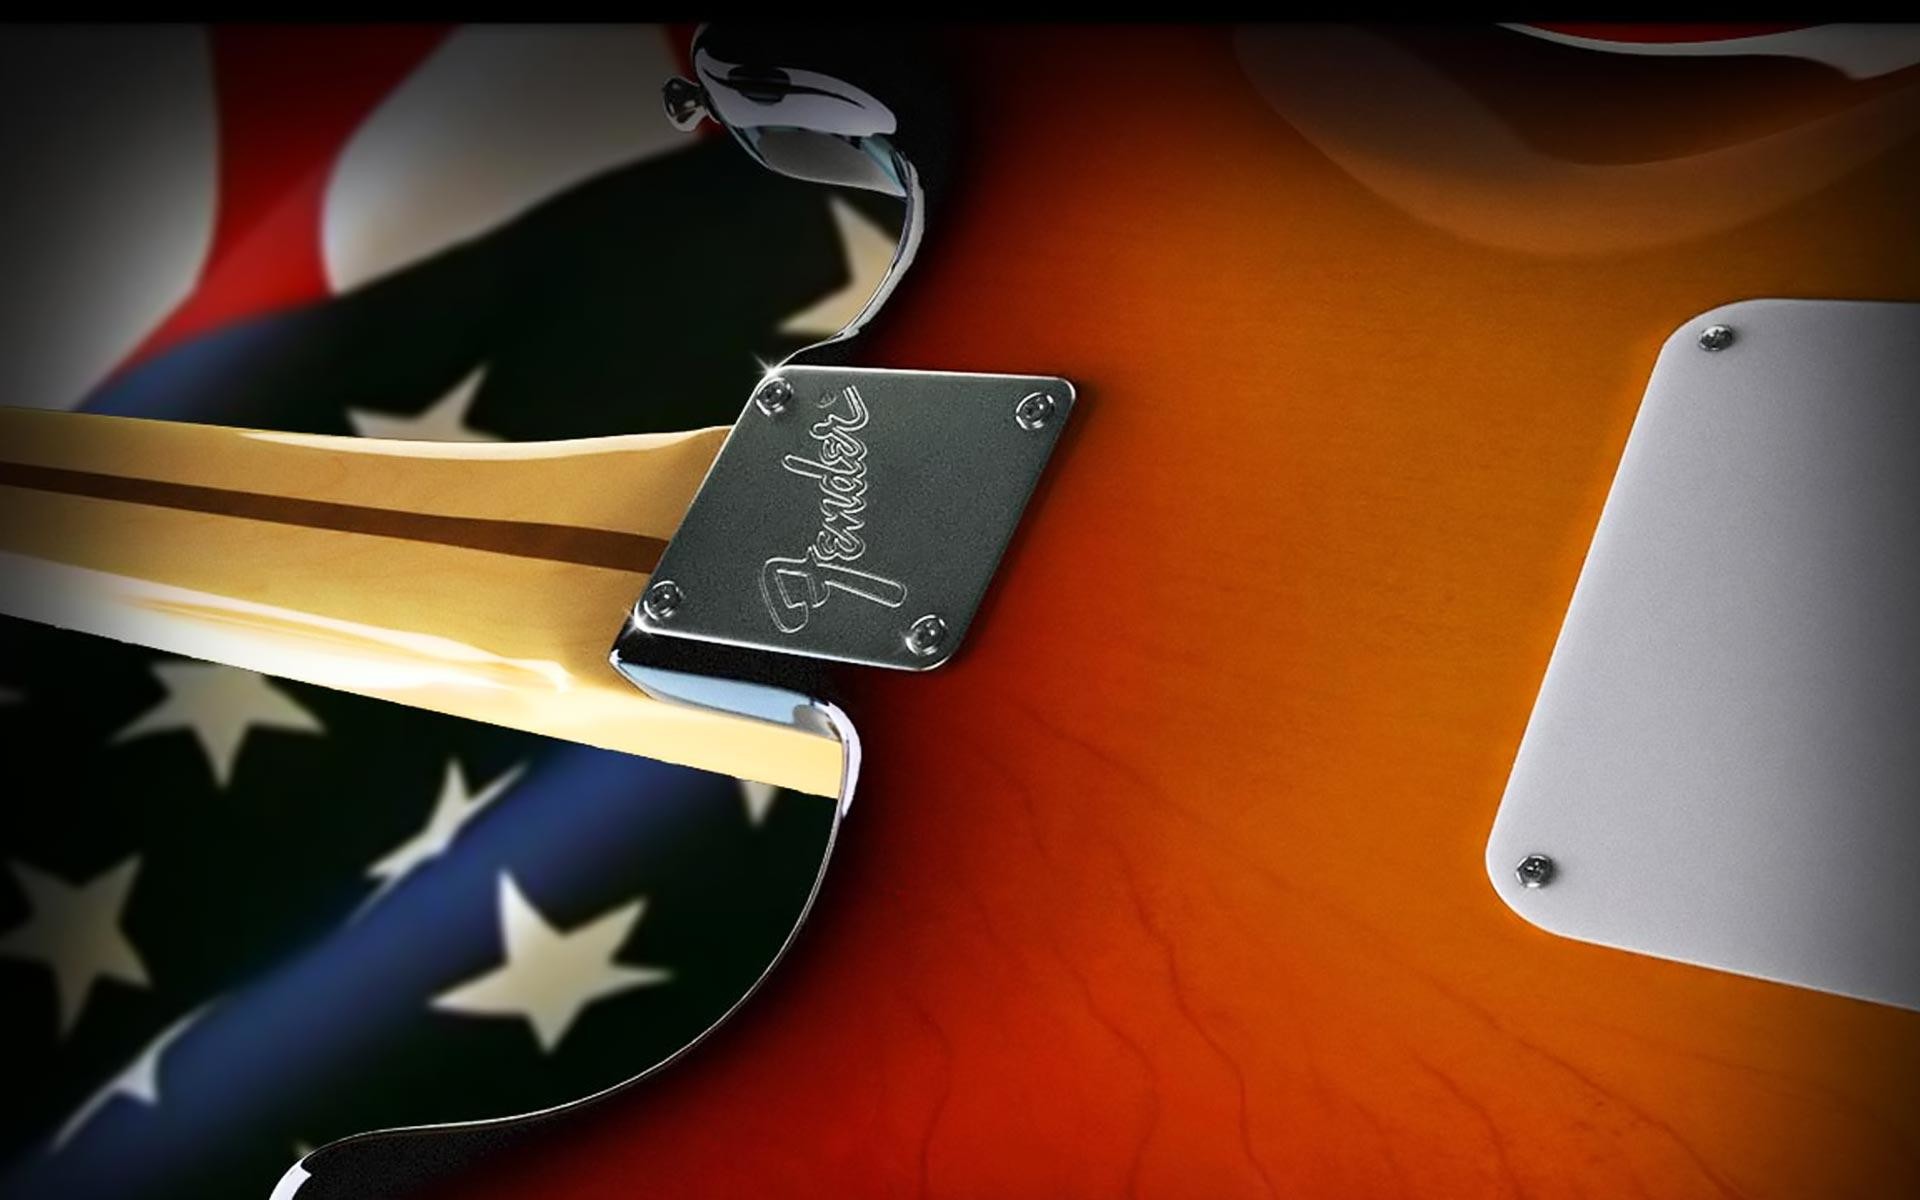 Fender Music Guitar iPhone 6s Wallpapers HD